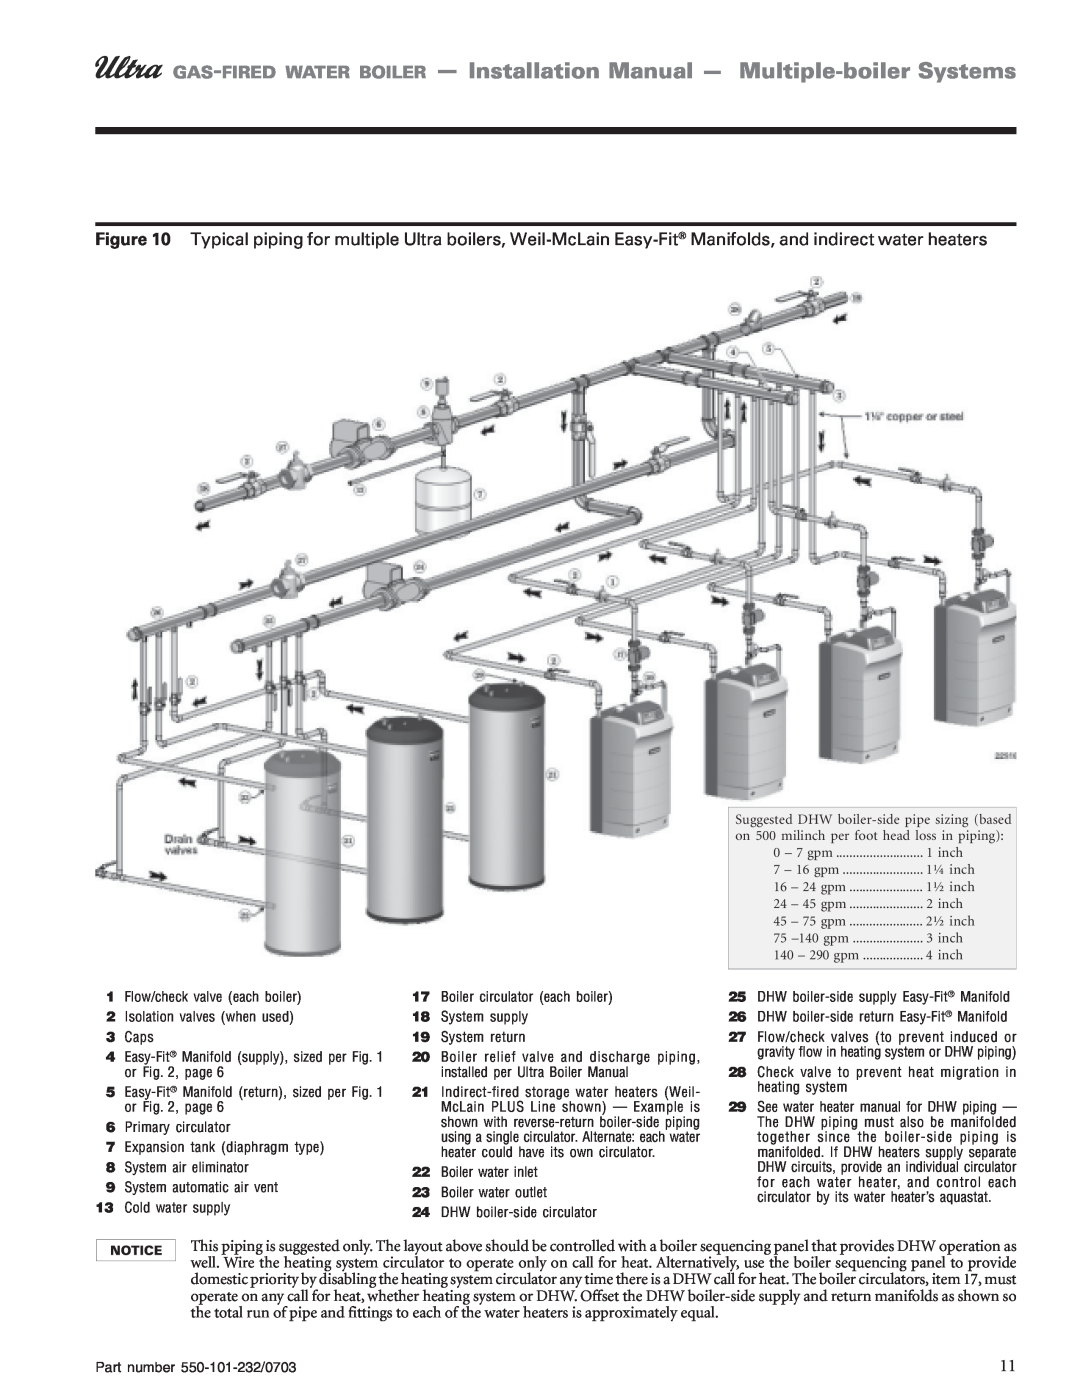 Weil-McLain Boiler installation manual 1Flow/check valve each boiler, inch 